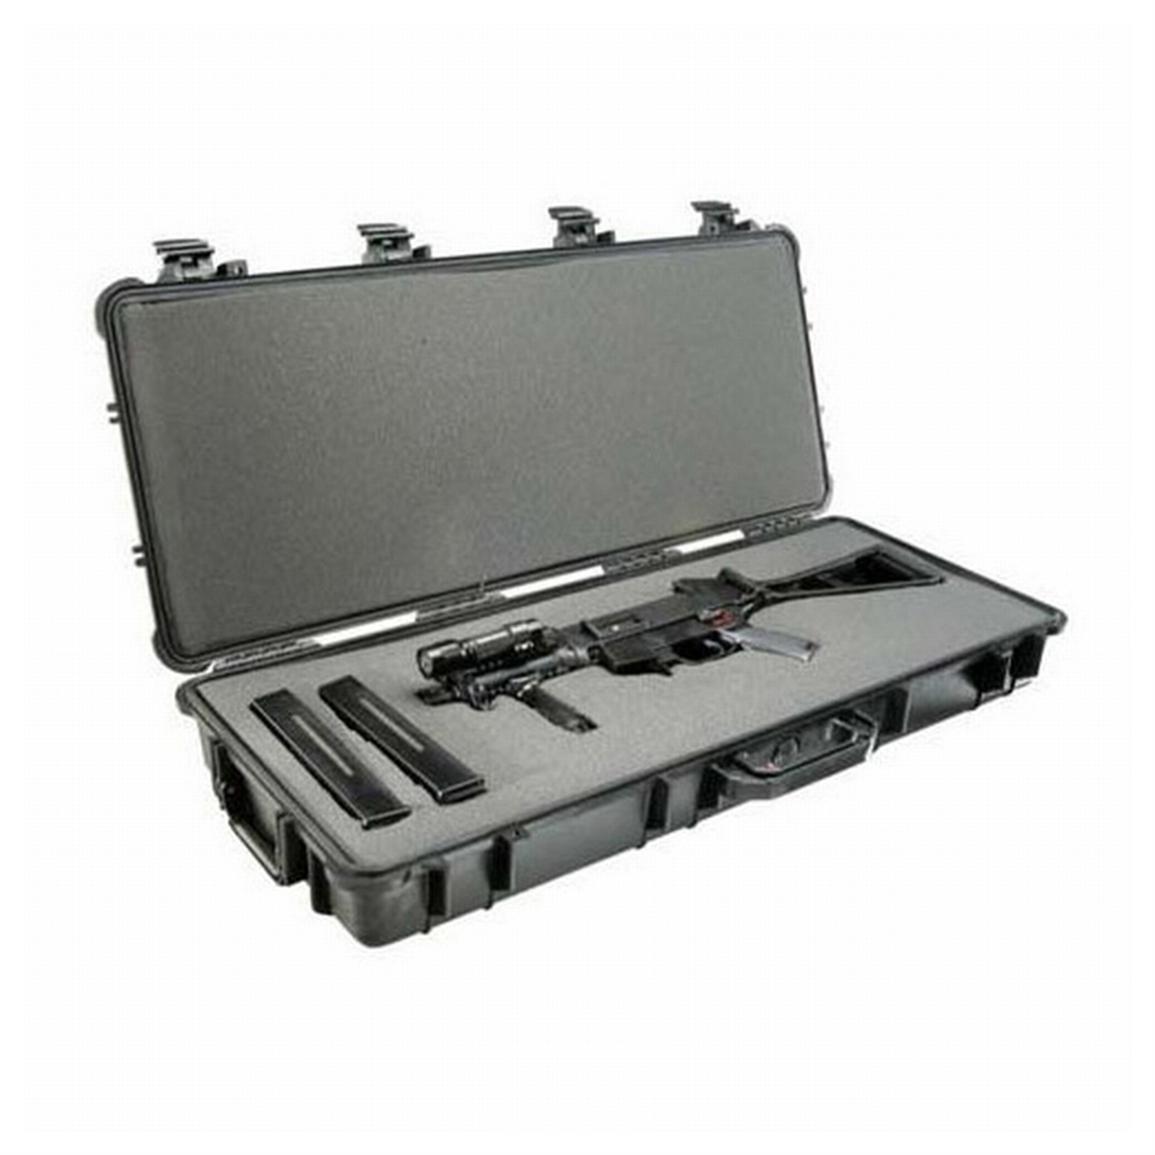 Pelican™ 1700 Gun Case - 581376, Gun Cases at Sportsman's Guide